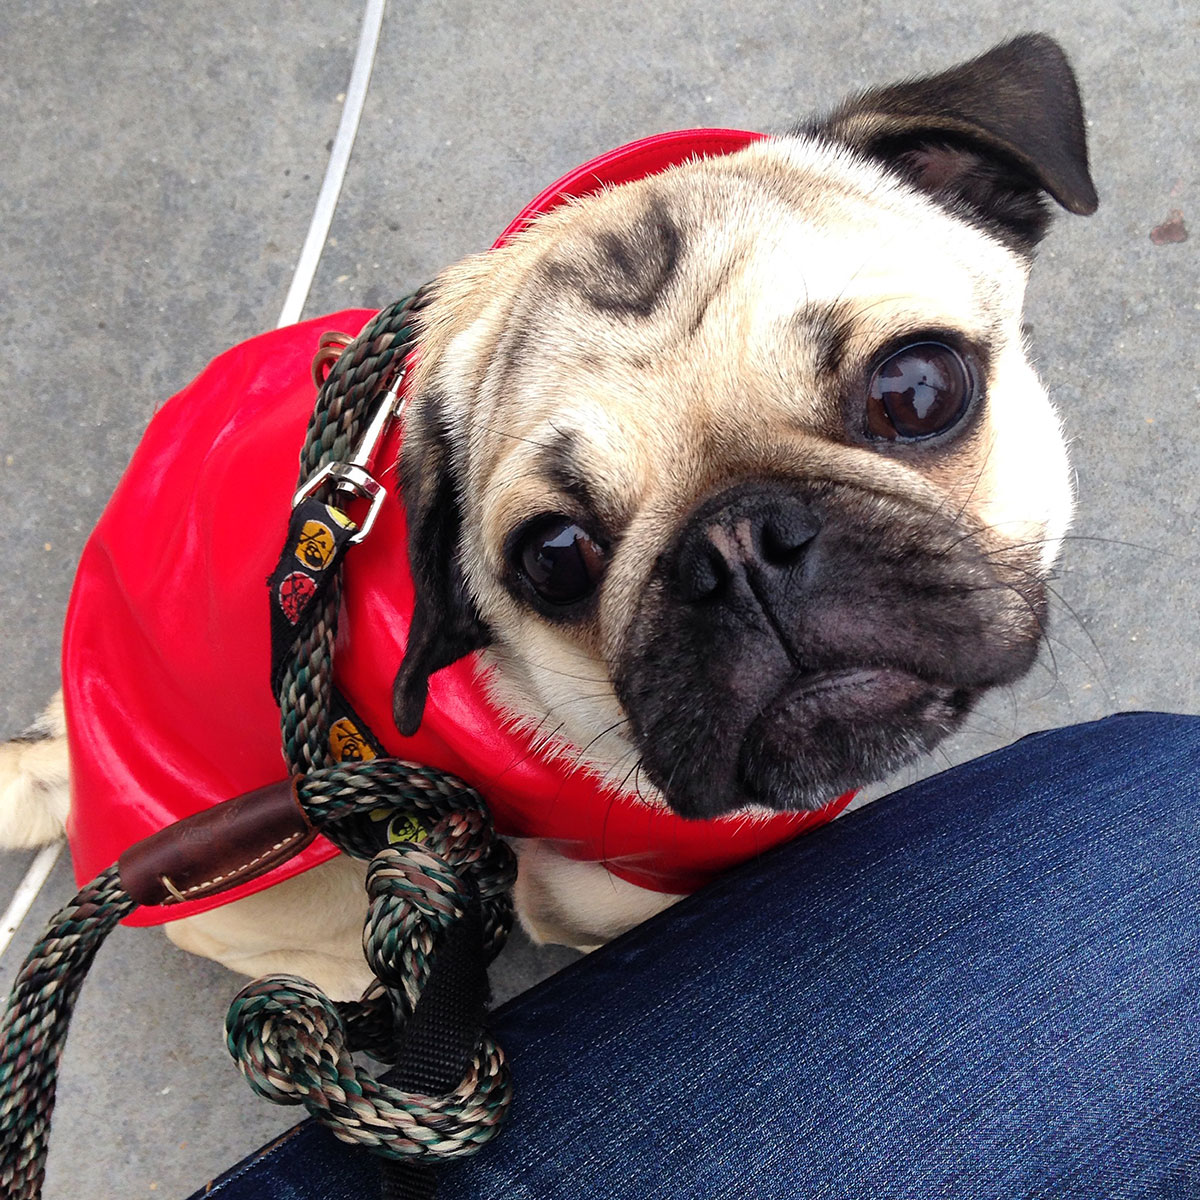 Pug in a red coat